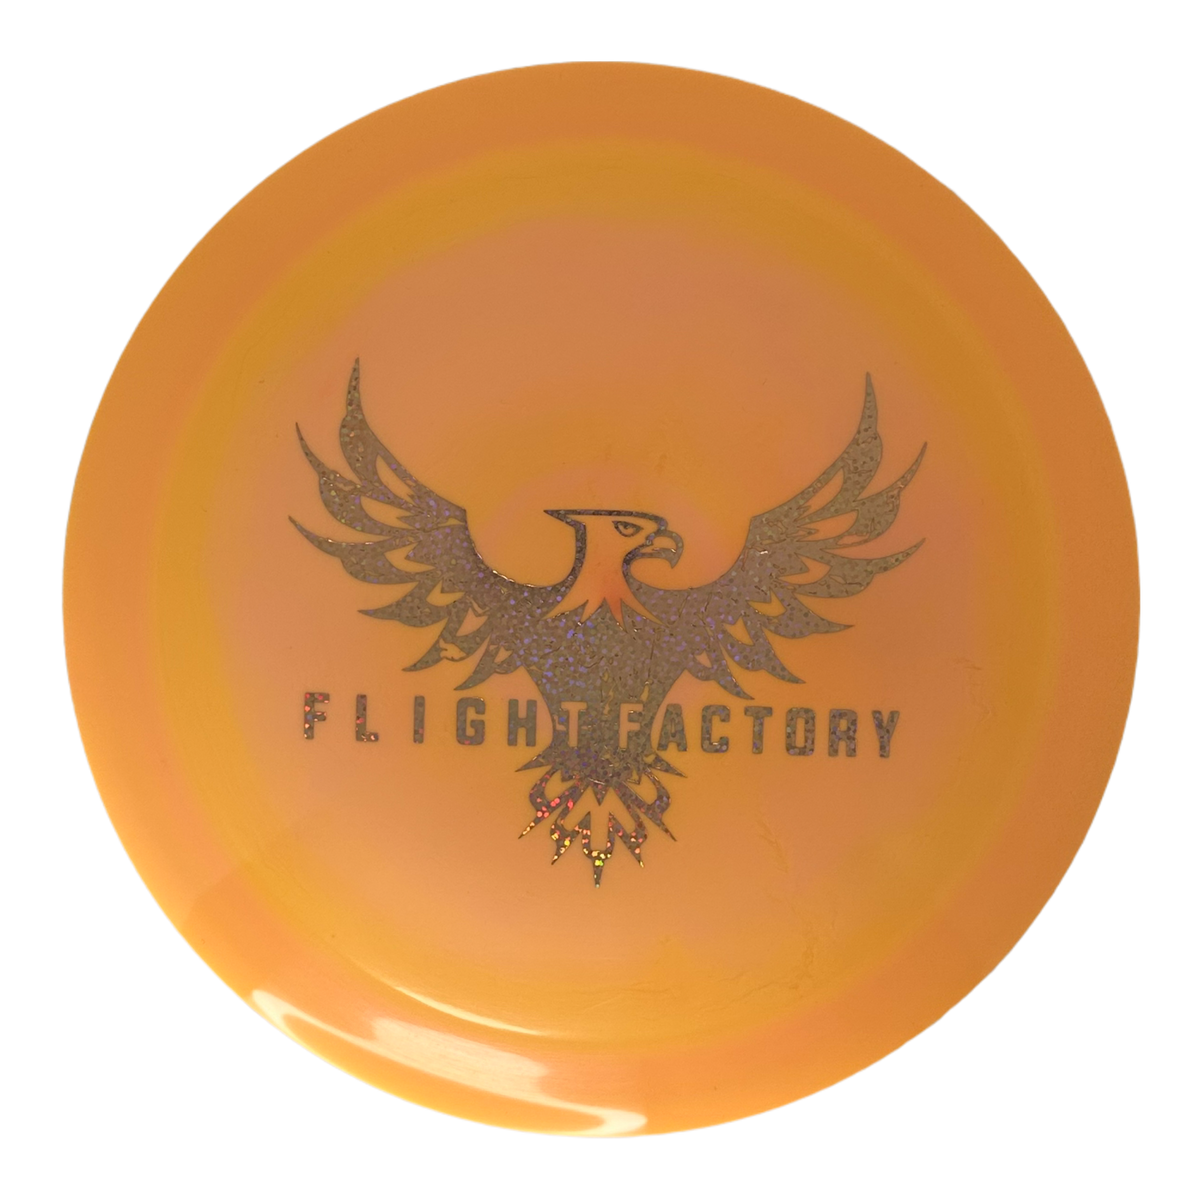 Discraft ESP Scorch - Flight Factory Eagle